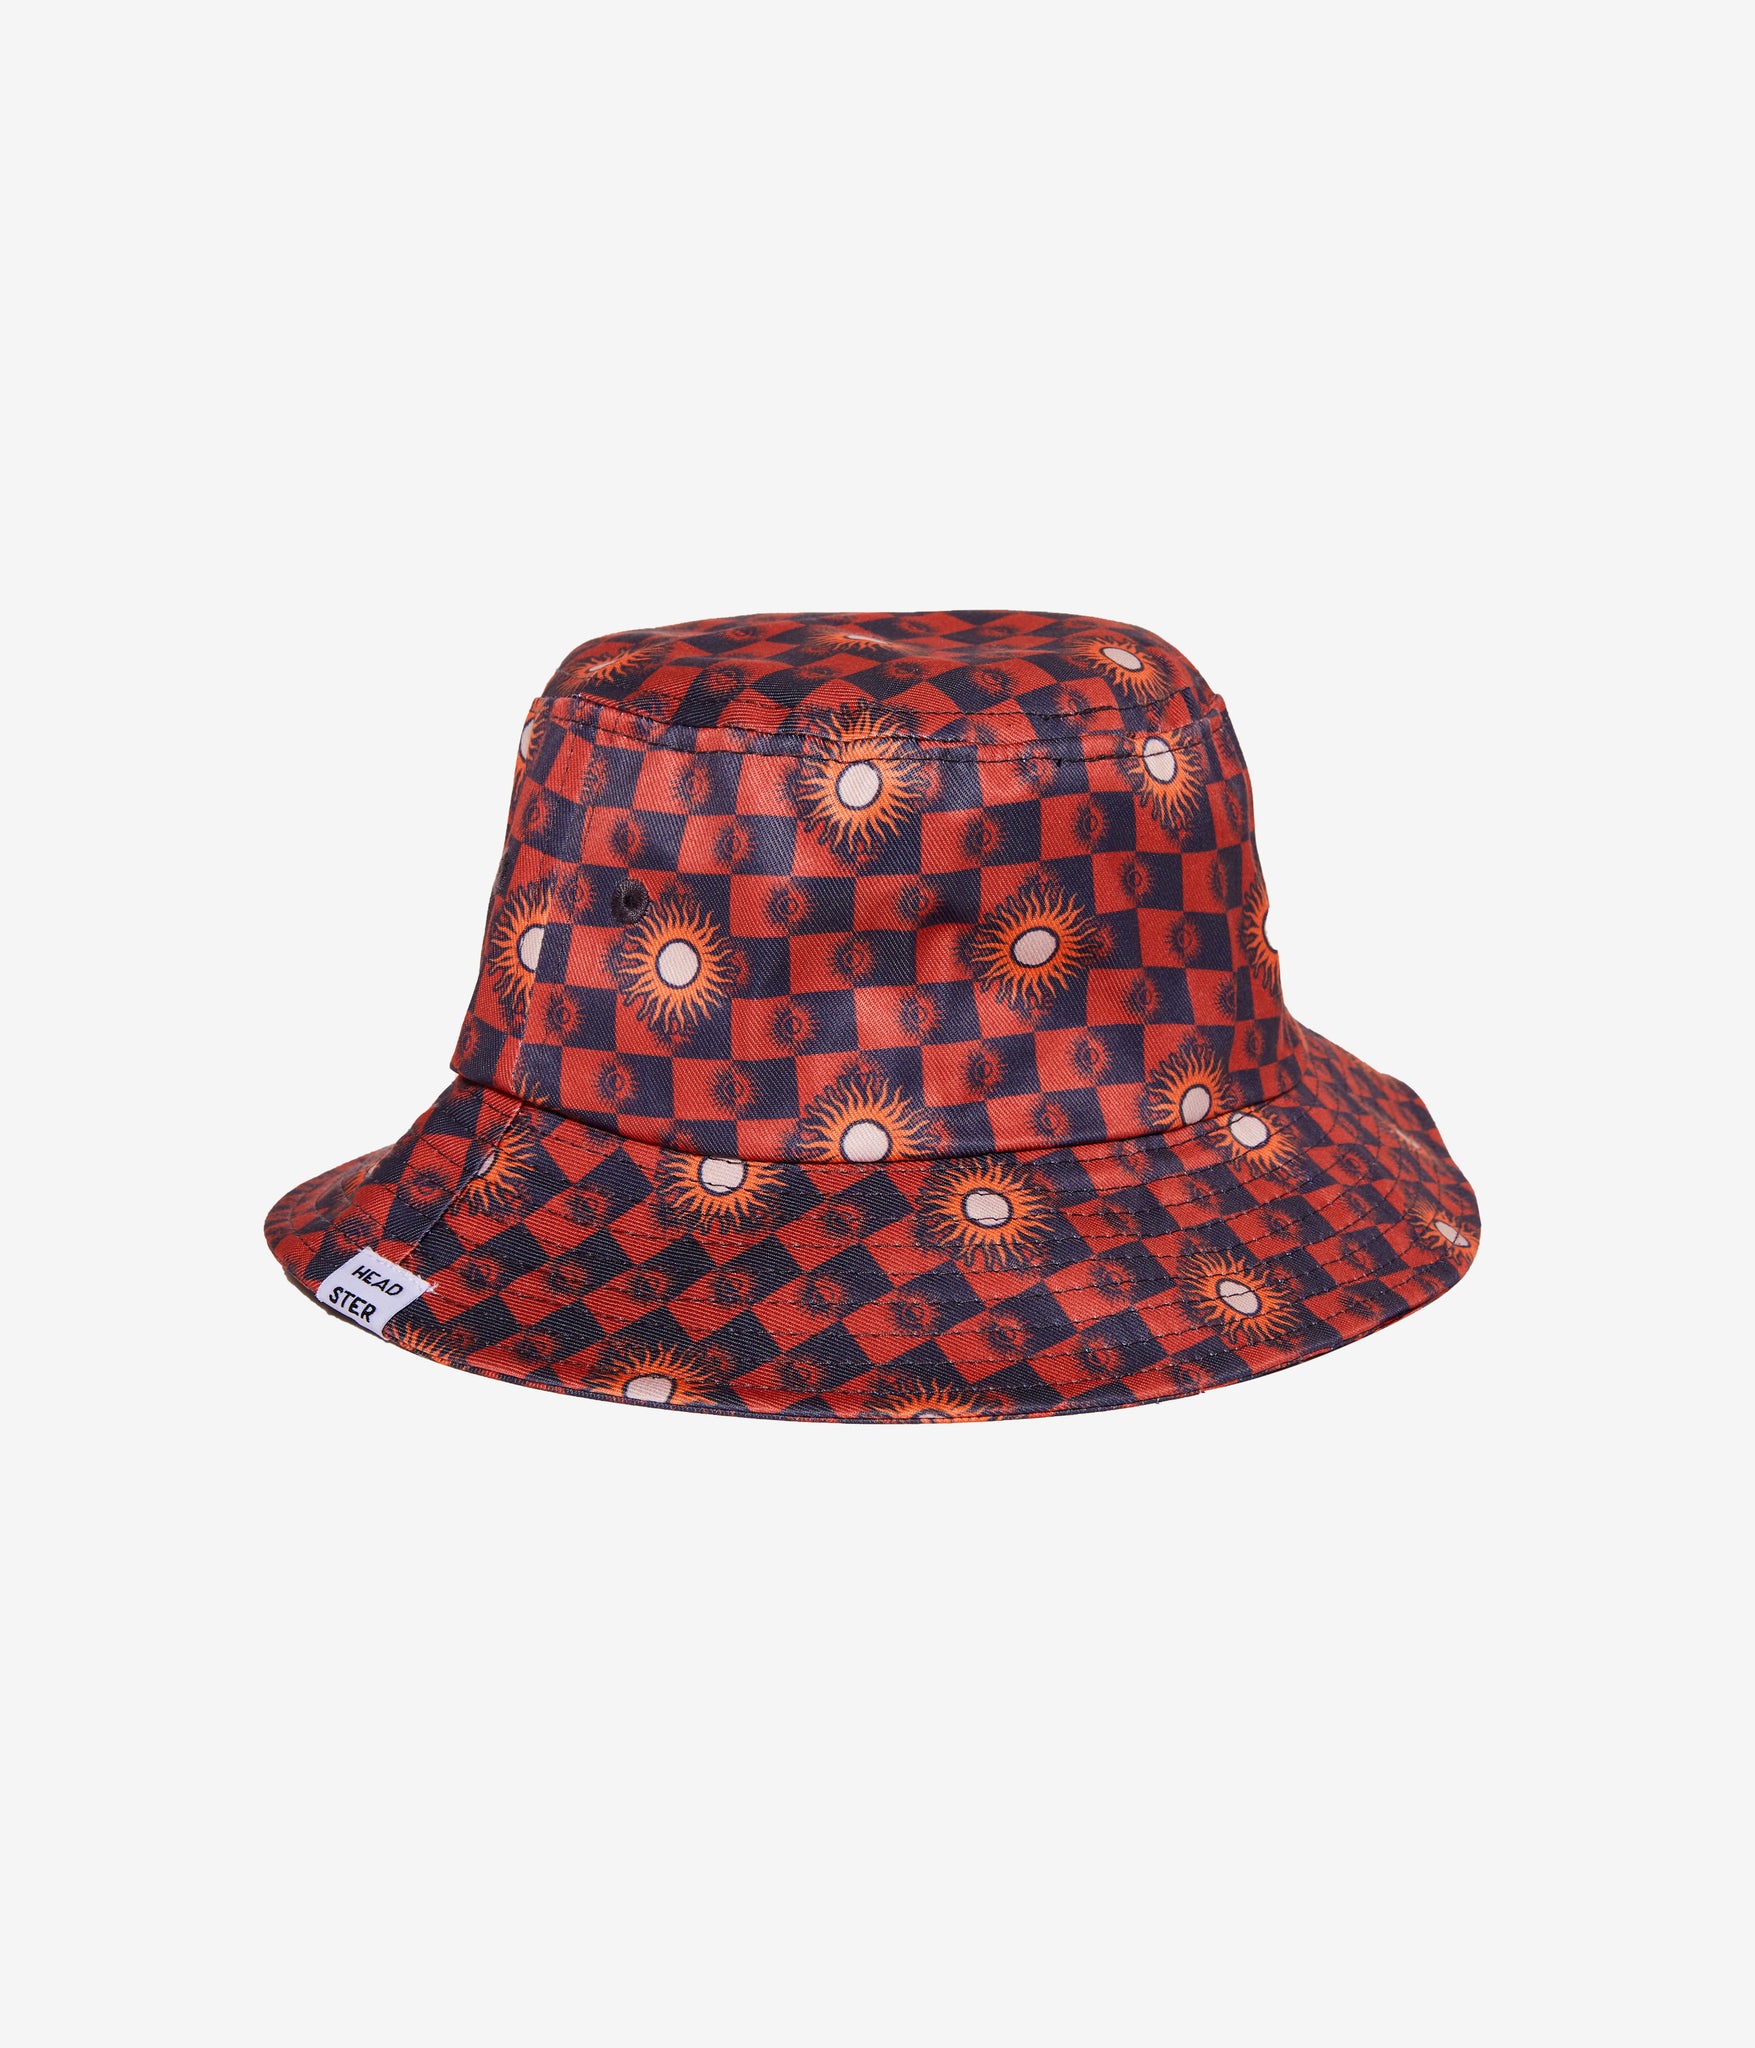 Rising Sun Red Bucket Hat